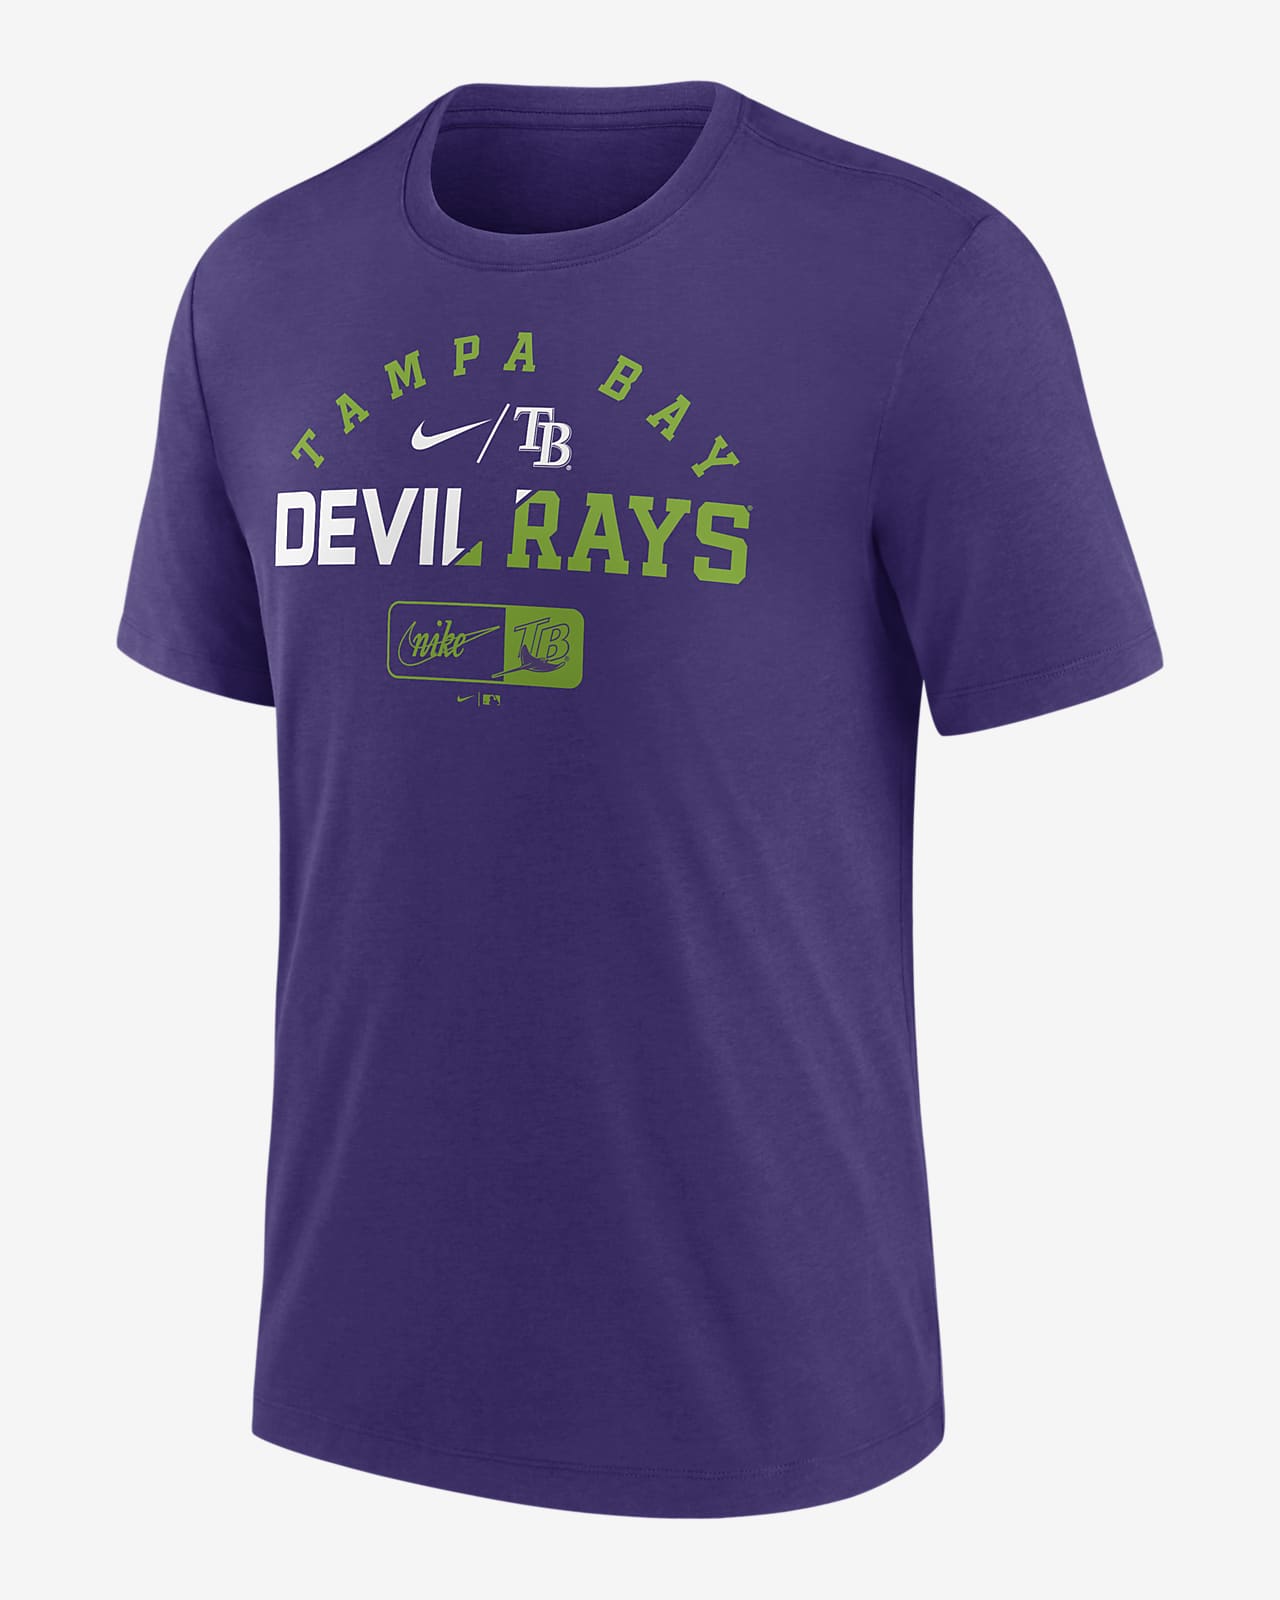 devil rays t shirt